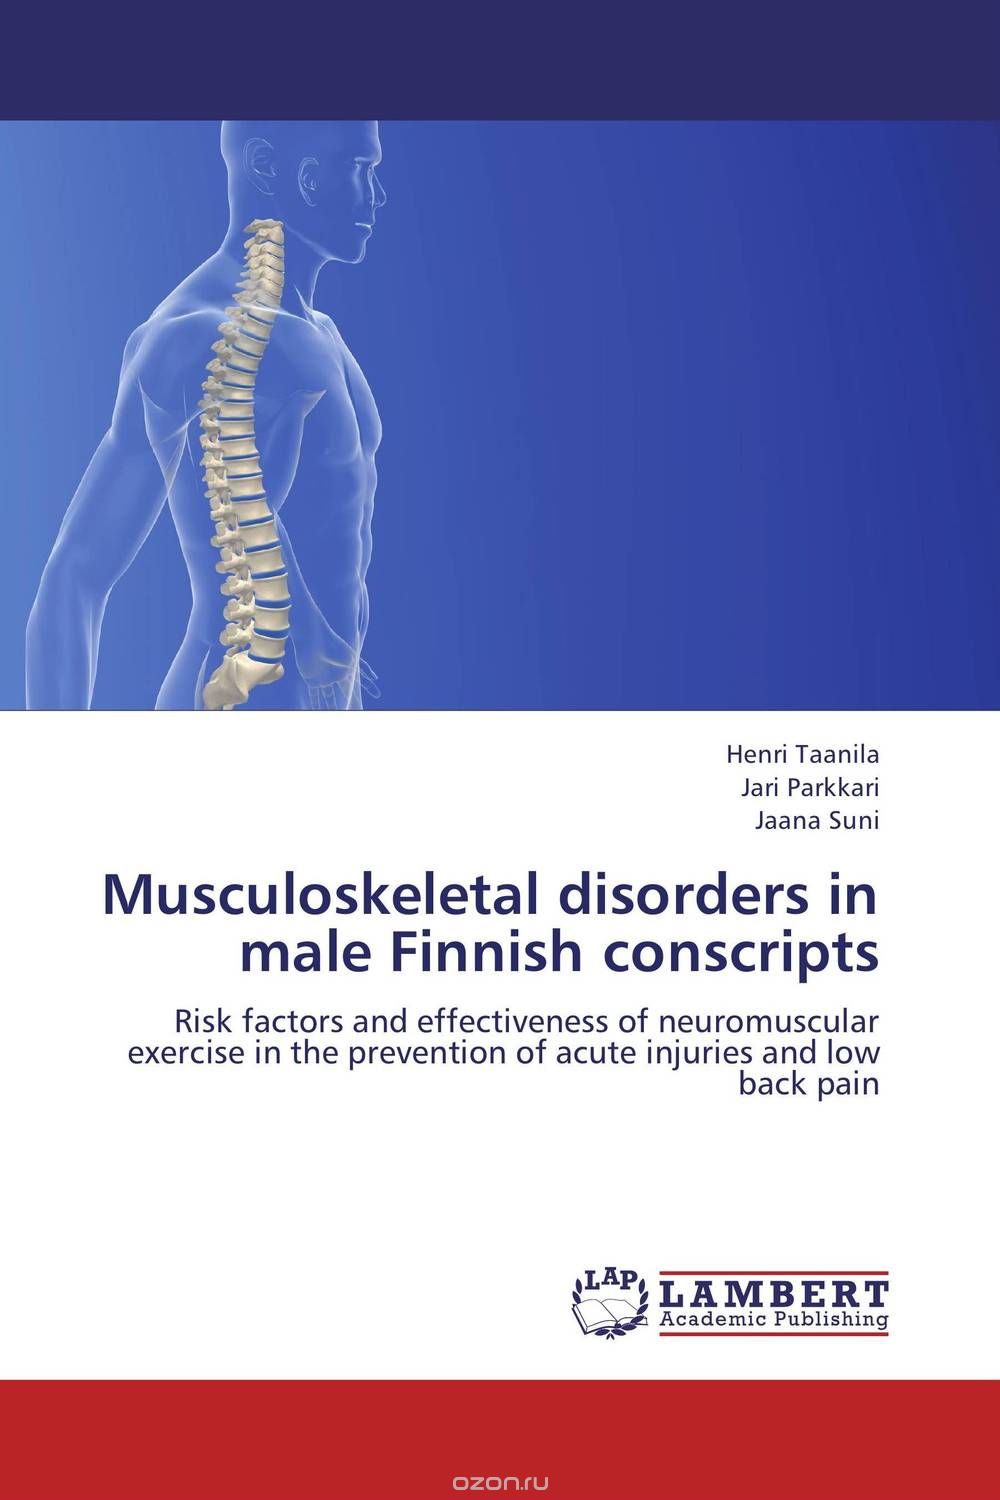 Скачать книгу "Musculoskeletal disorders in male Finnish conscripts"